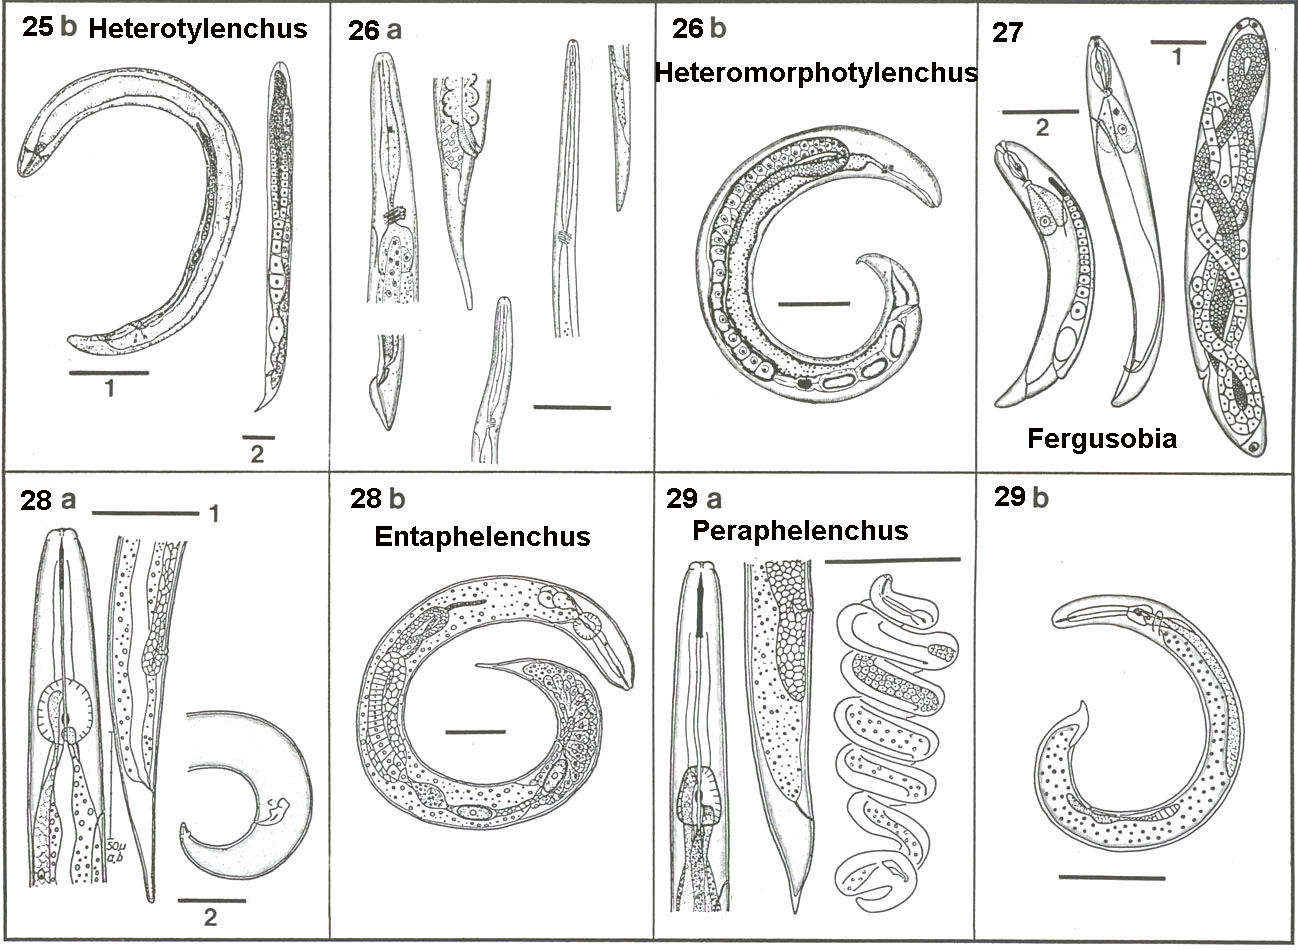 What are types of nematodes?